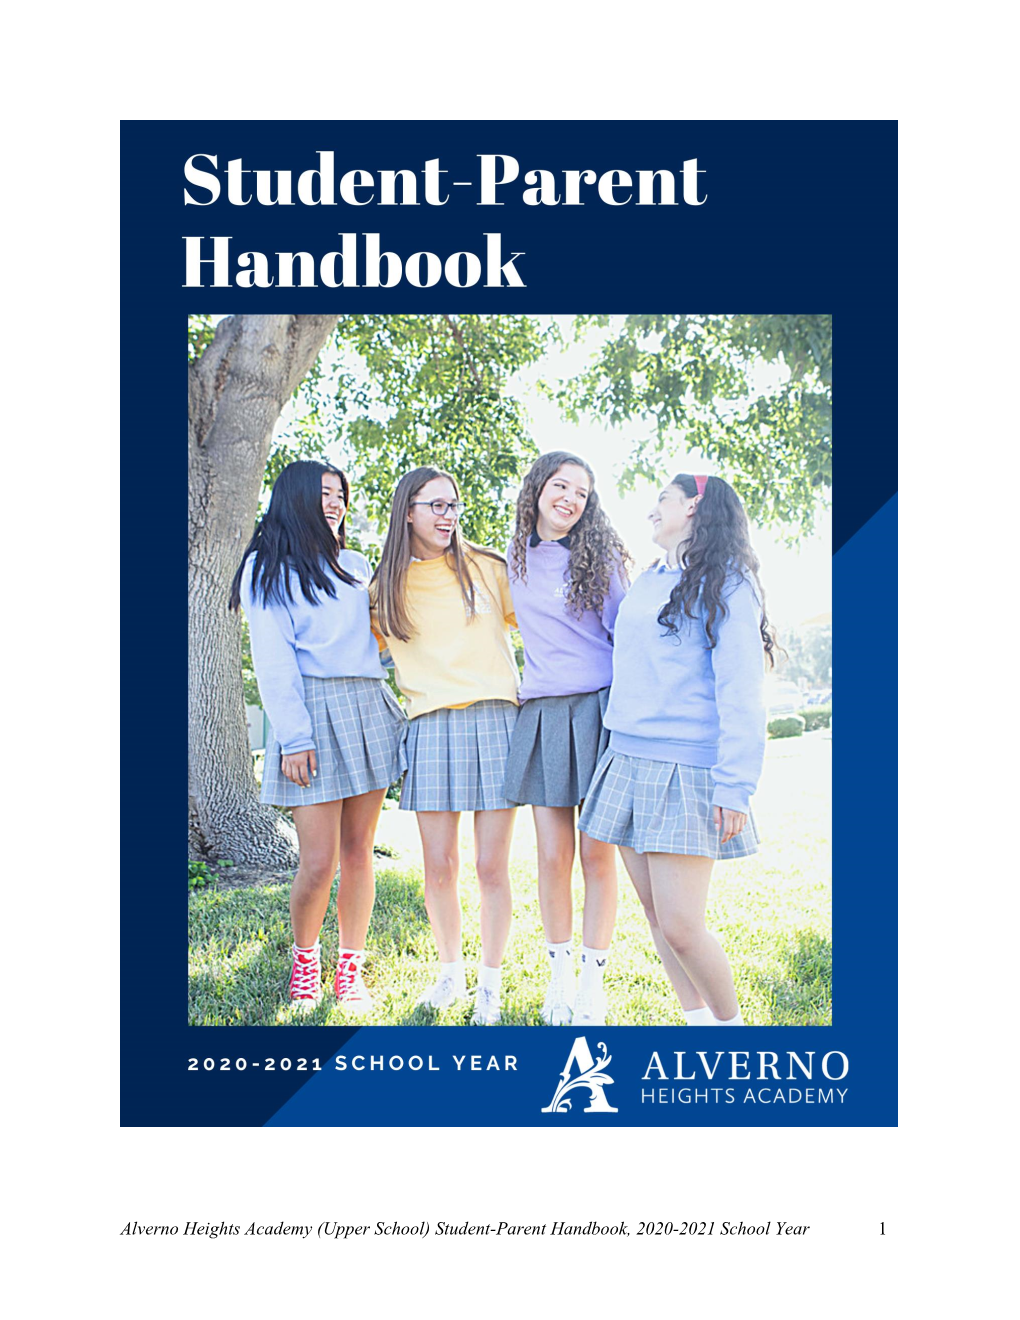 Student-Parent Handbook, 2020-2021 School Year 1